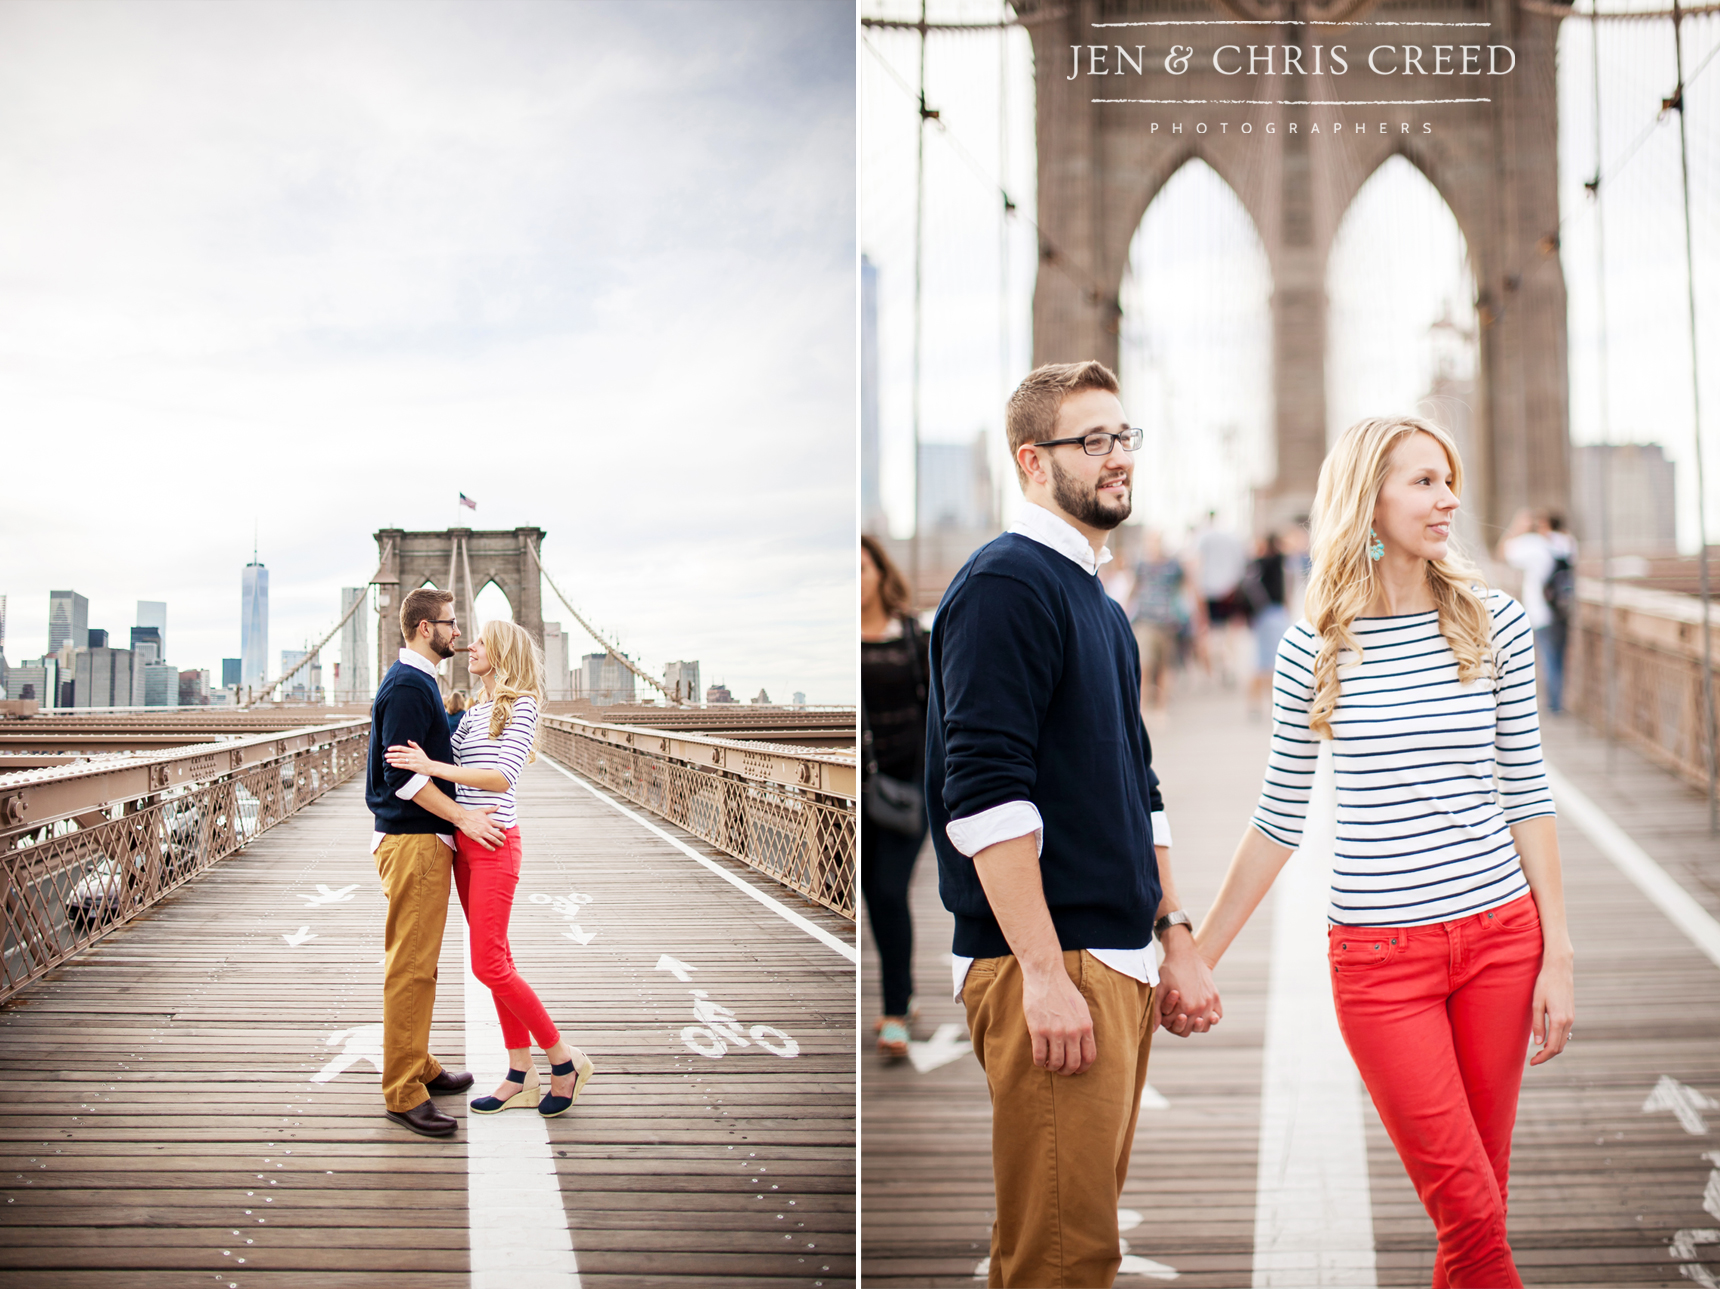 Brooklyn Bridge engagement photos